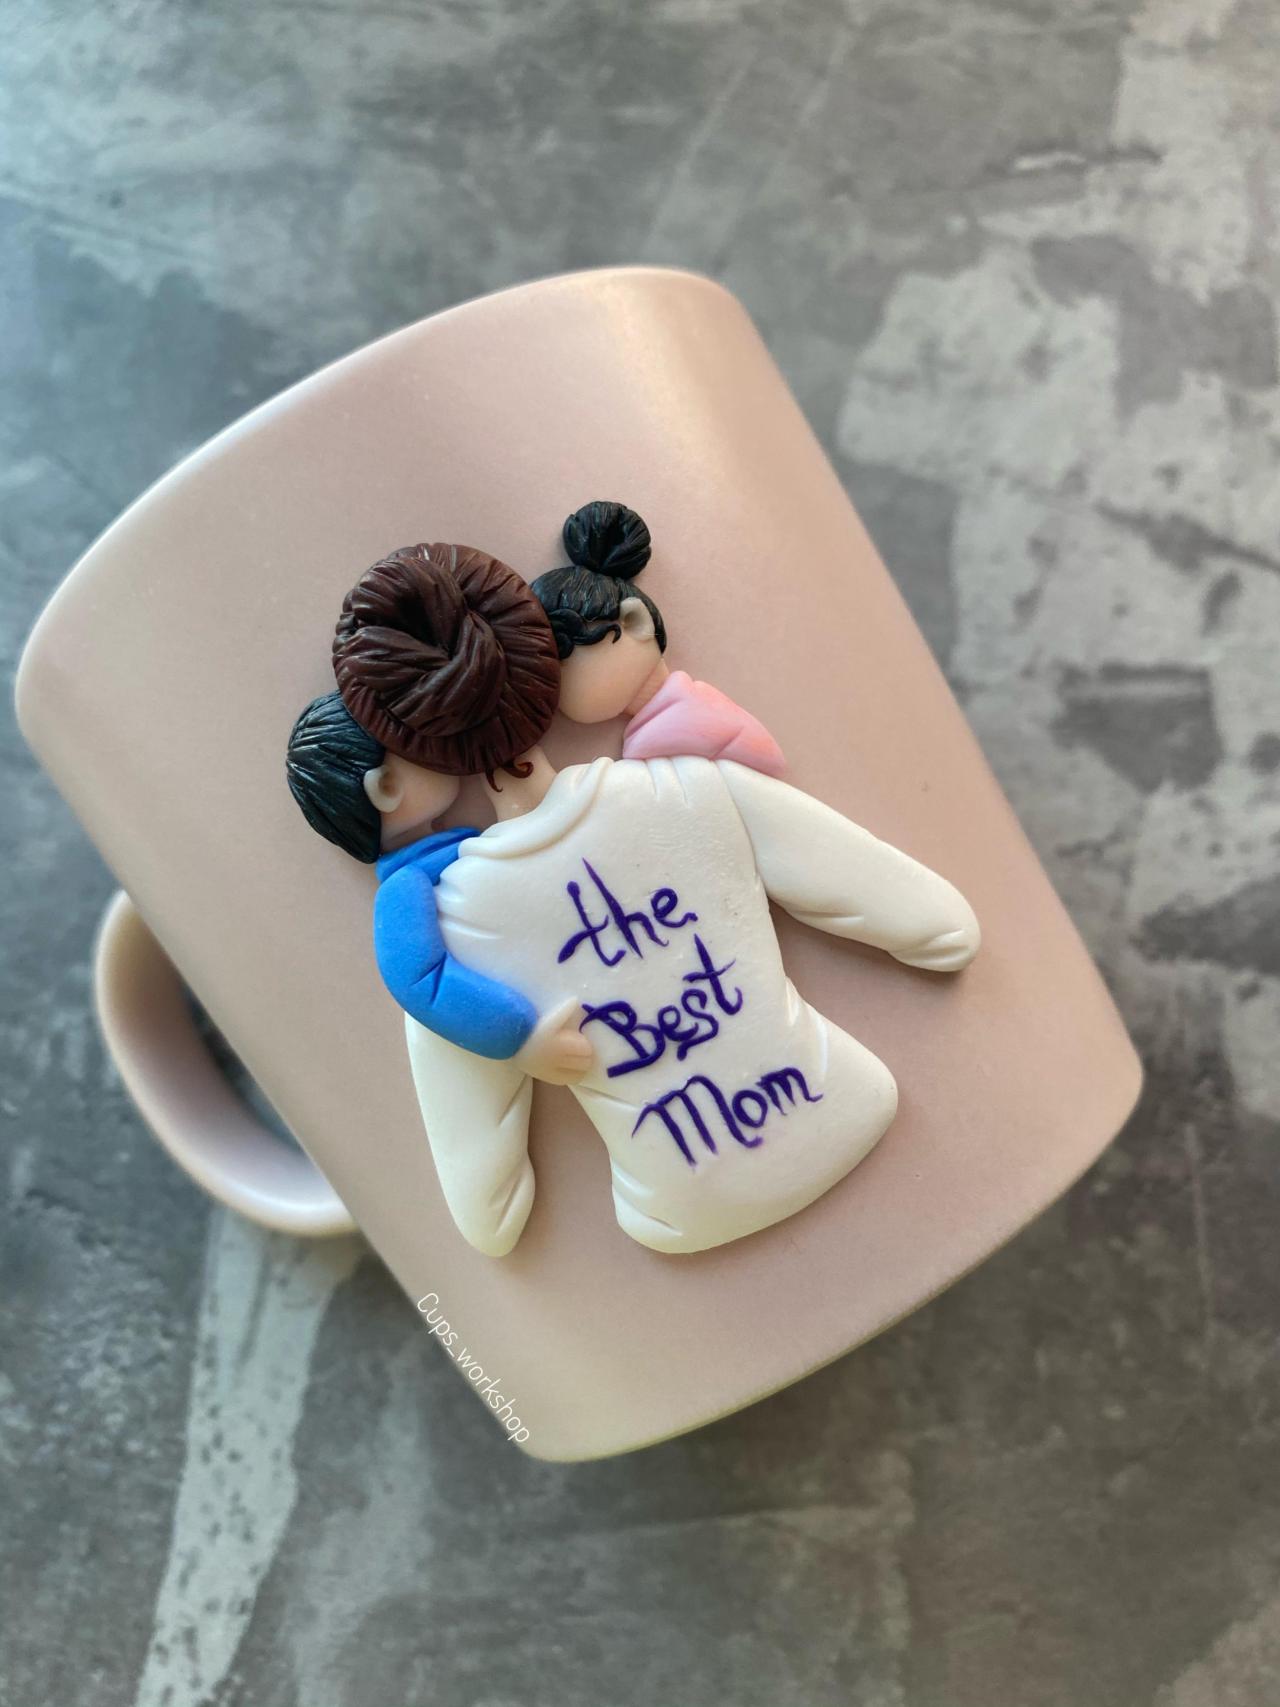 Mothers day gift box from daughter - ceramic mug handmade